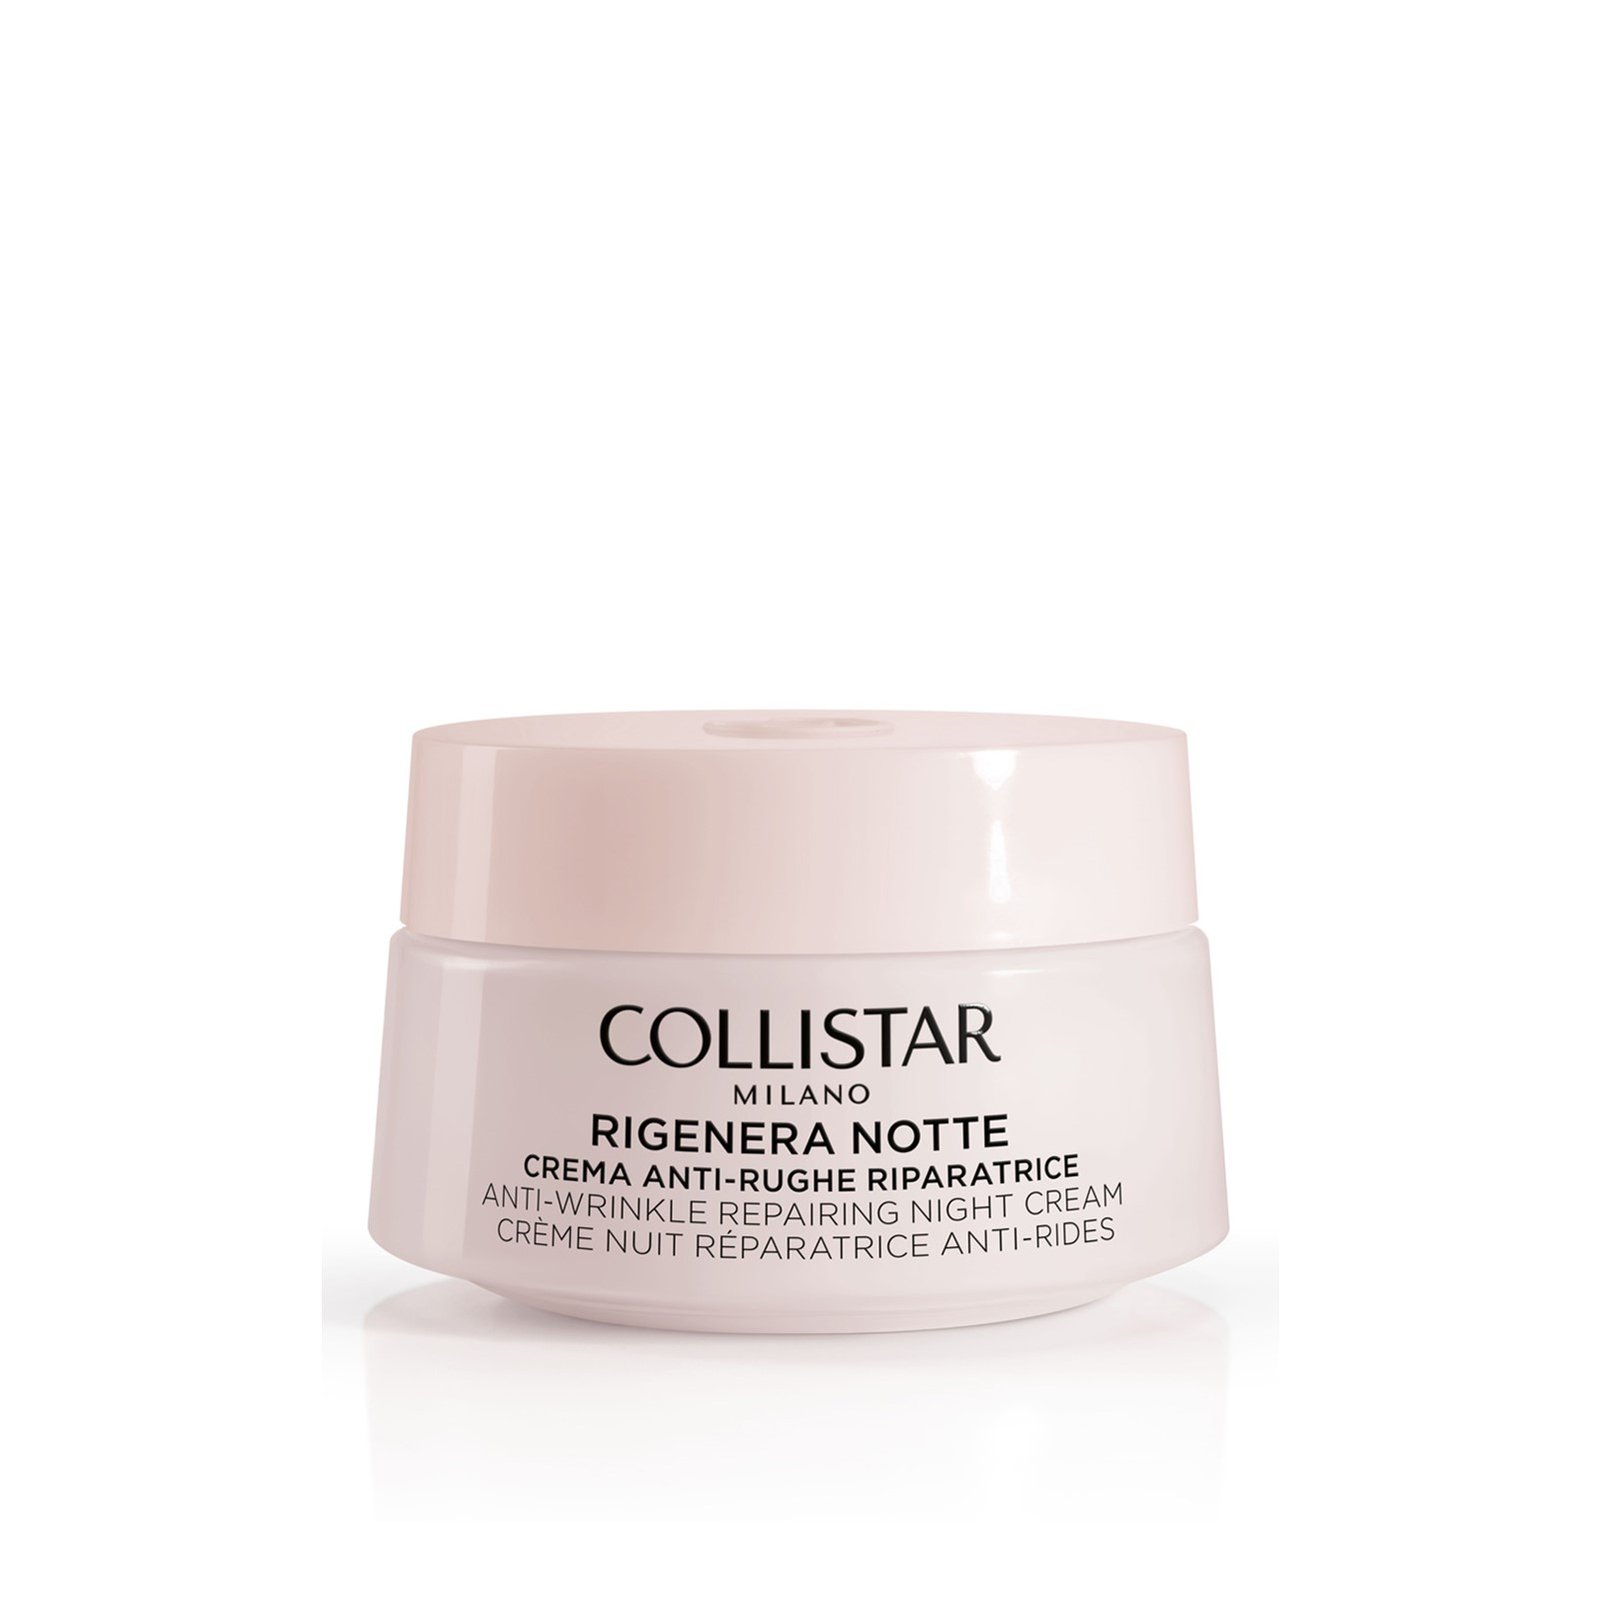 Collistar Rigenera Anti-Wrinkle Repairing Night Cream 50ml (1.6 fl oz)